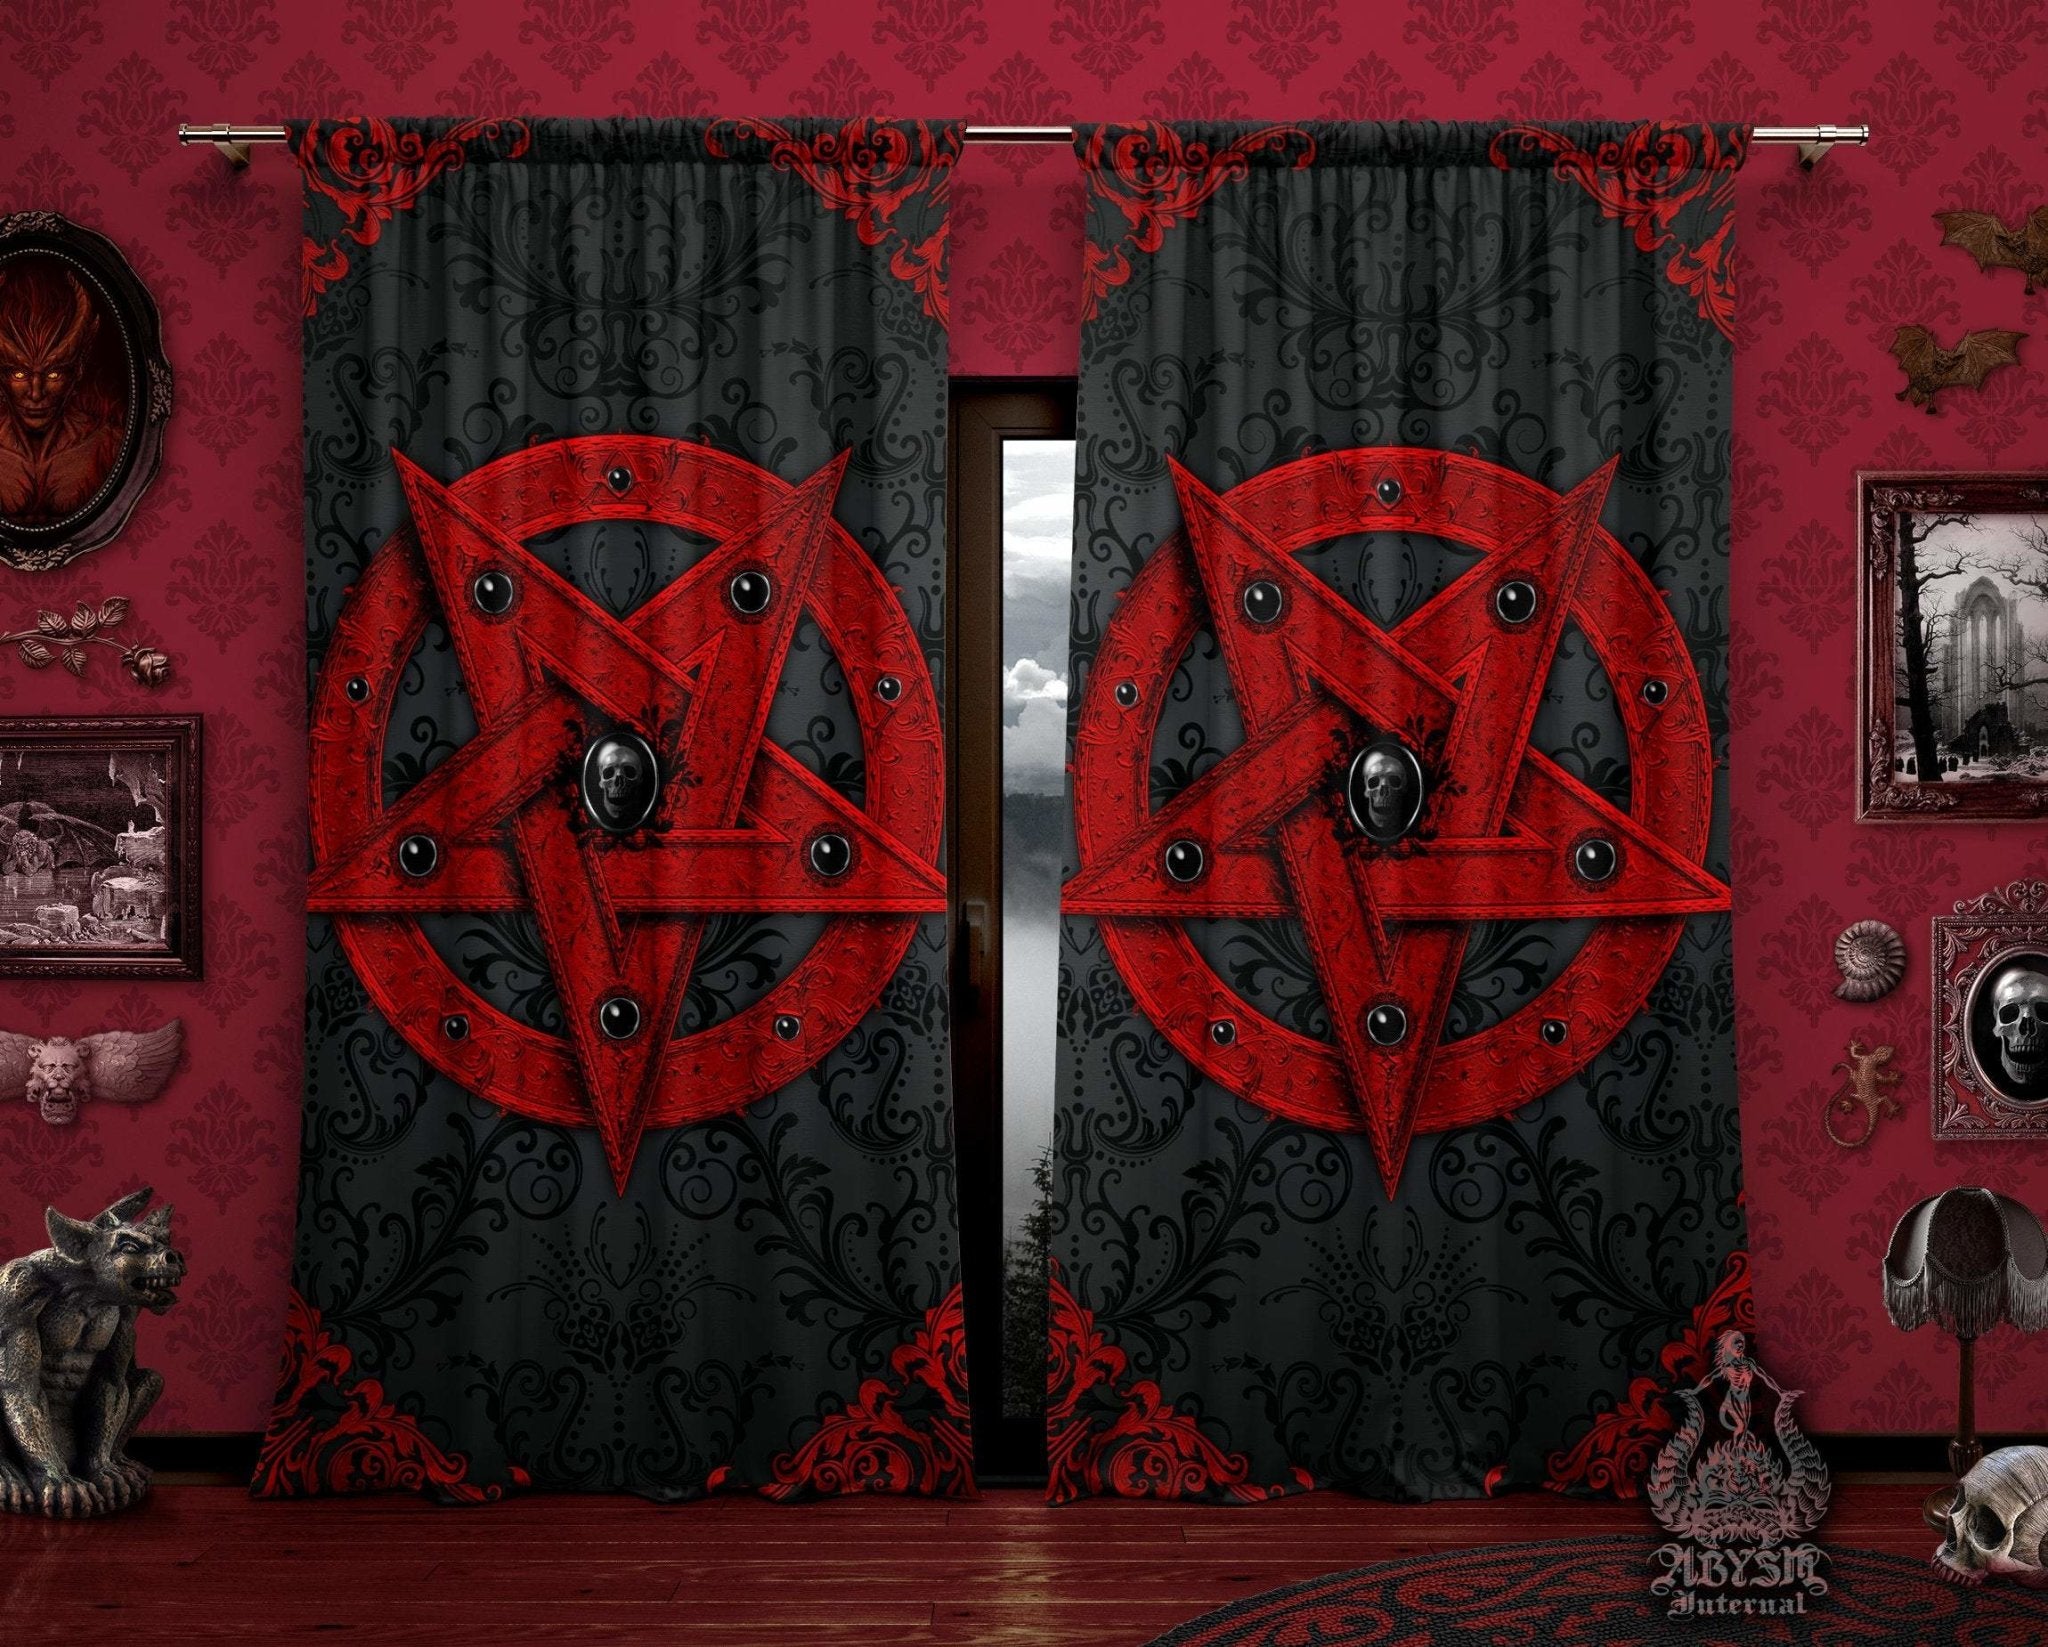 Satanic Blackout Curtains, Red Pentagram, Long Window Panels, Goth Home Decor - Abysm Internal